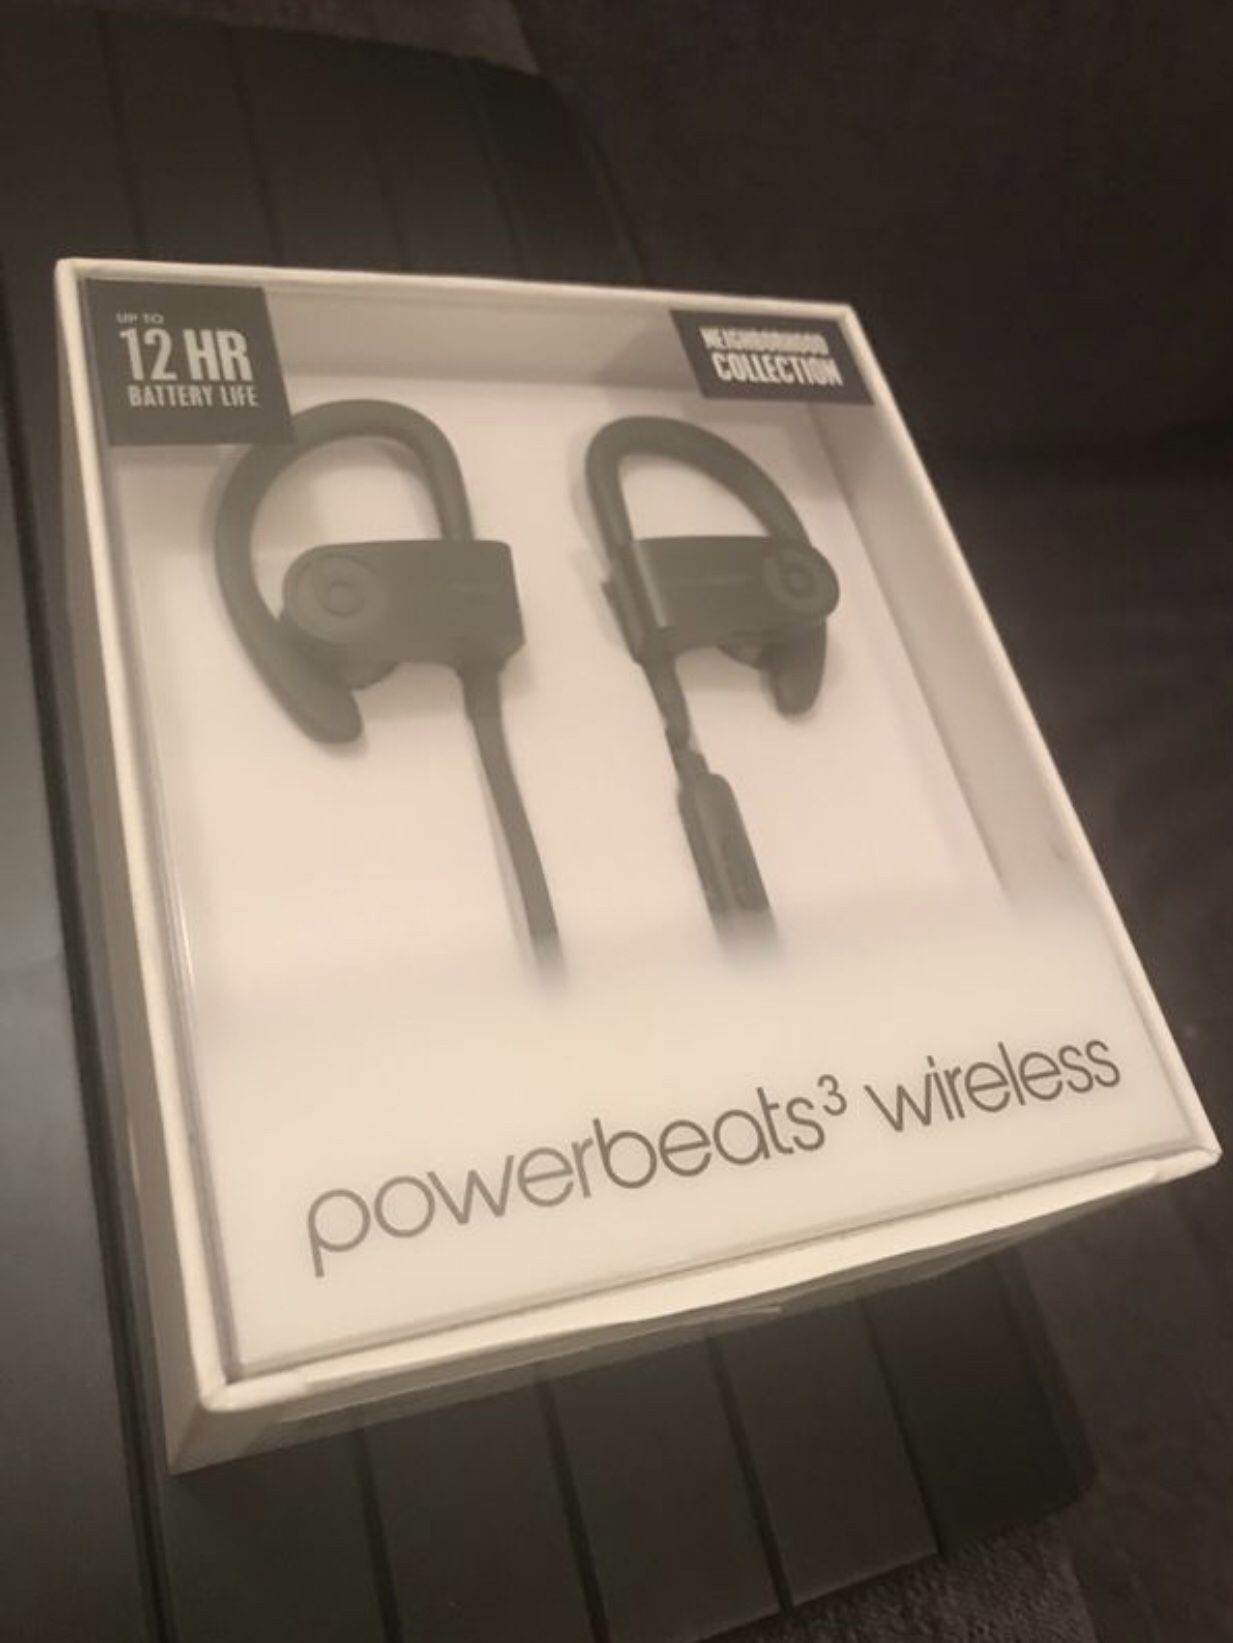 Powerbeats 3 Wireless Headphones By Dr. Dre - Not Bose Sonos Sony